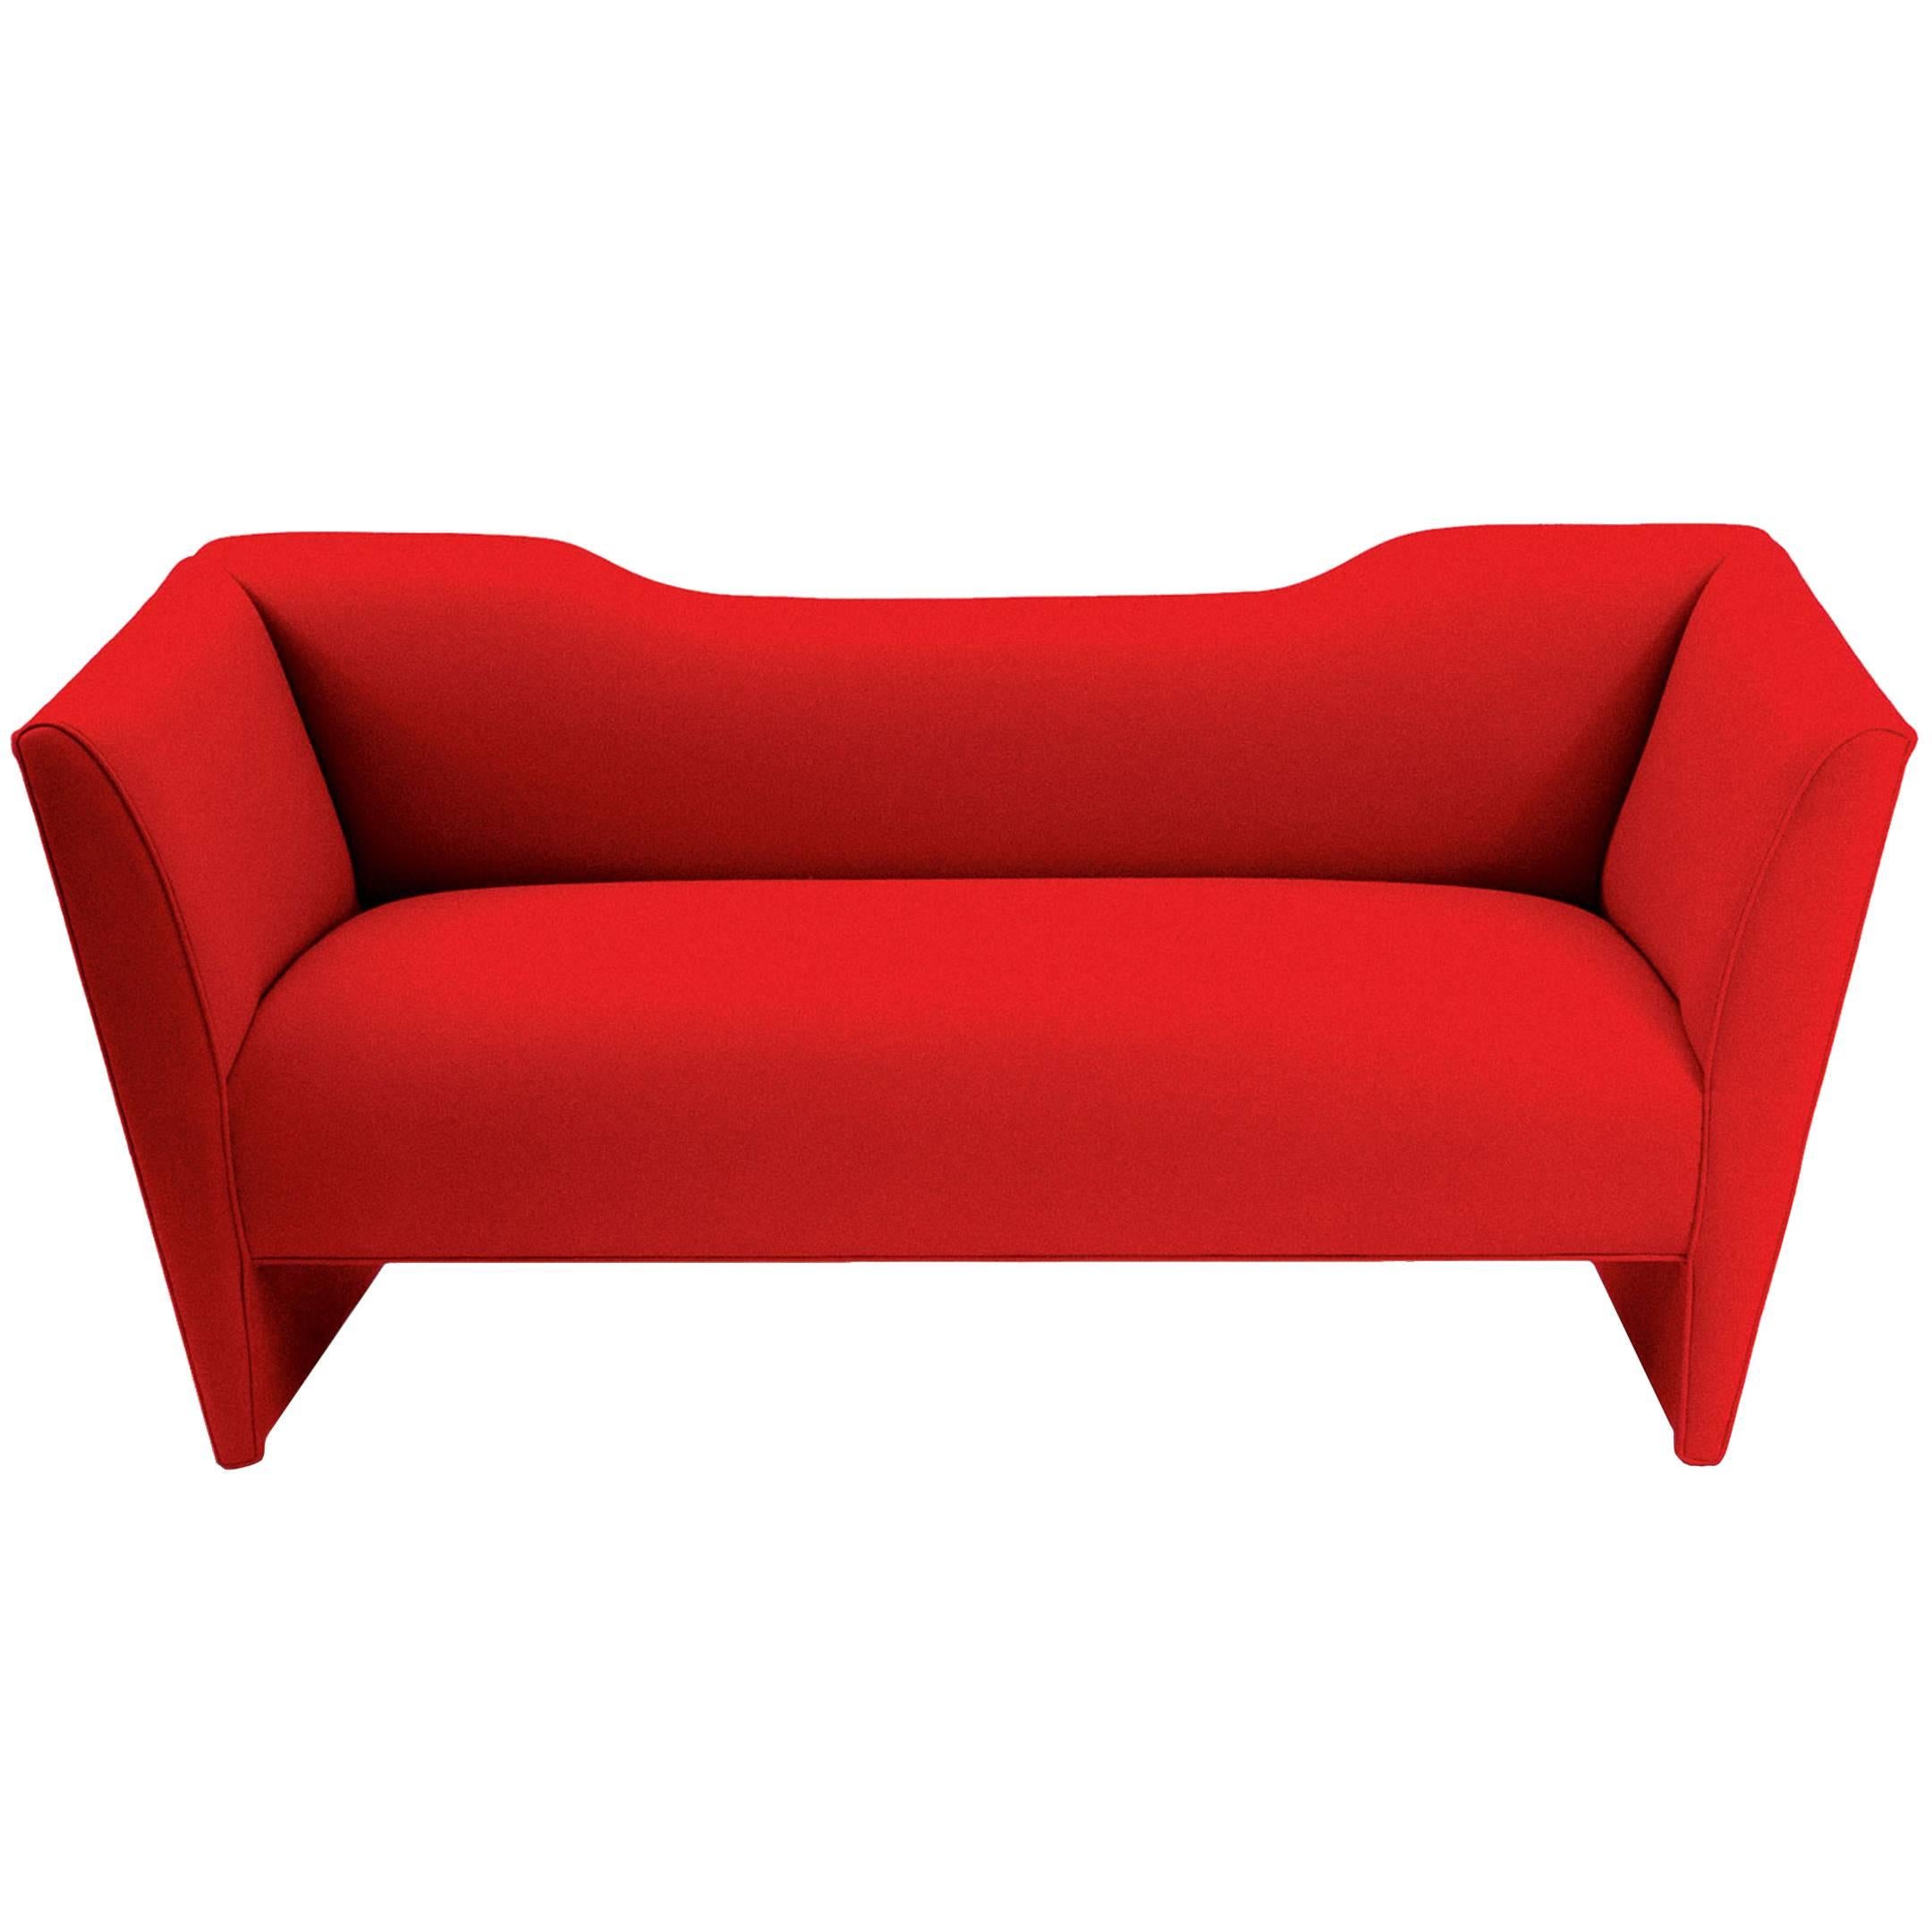 Sentient Memphis Inspired Nersi Sofa For Sale